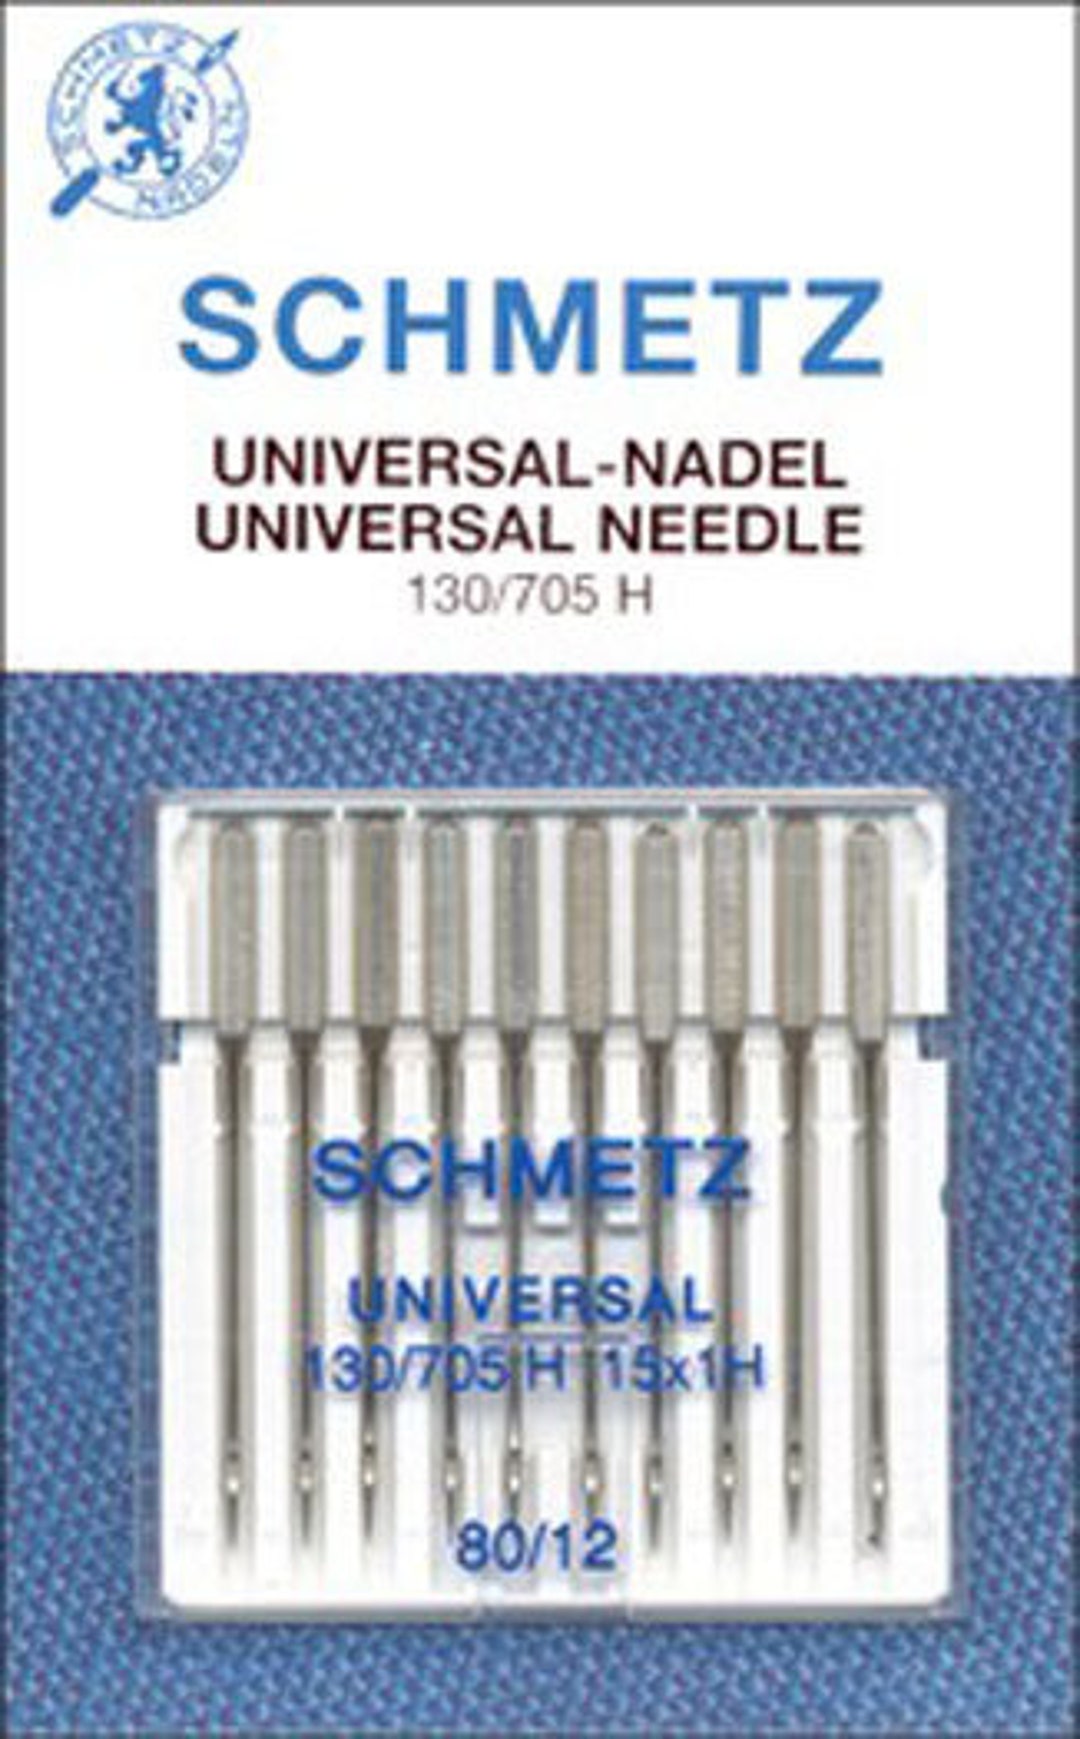 Sewing Machine Needles Schmetz Universal 5 Pack Size 90/14 